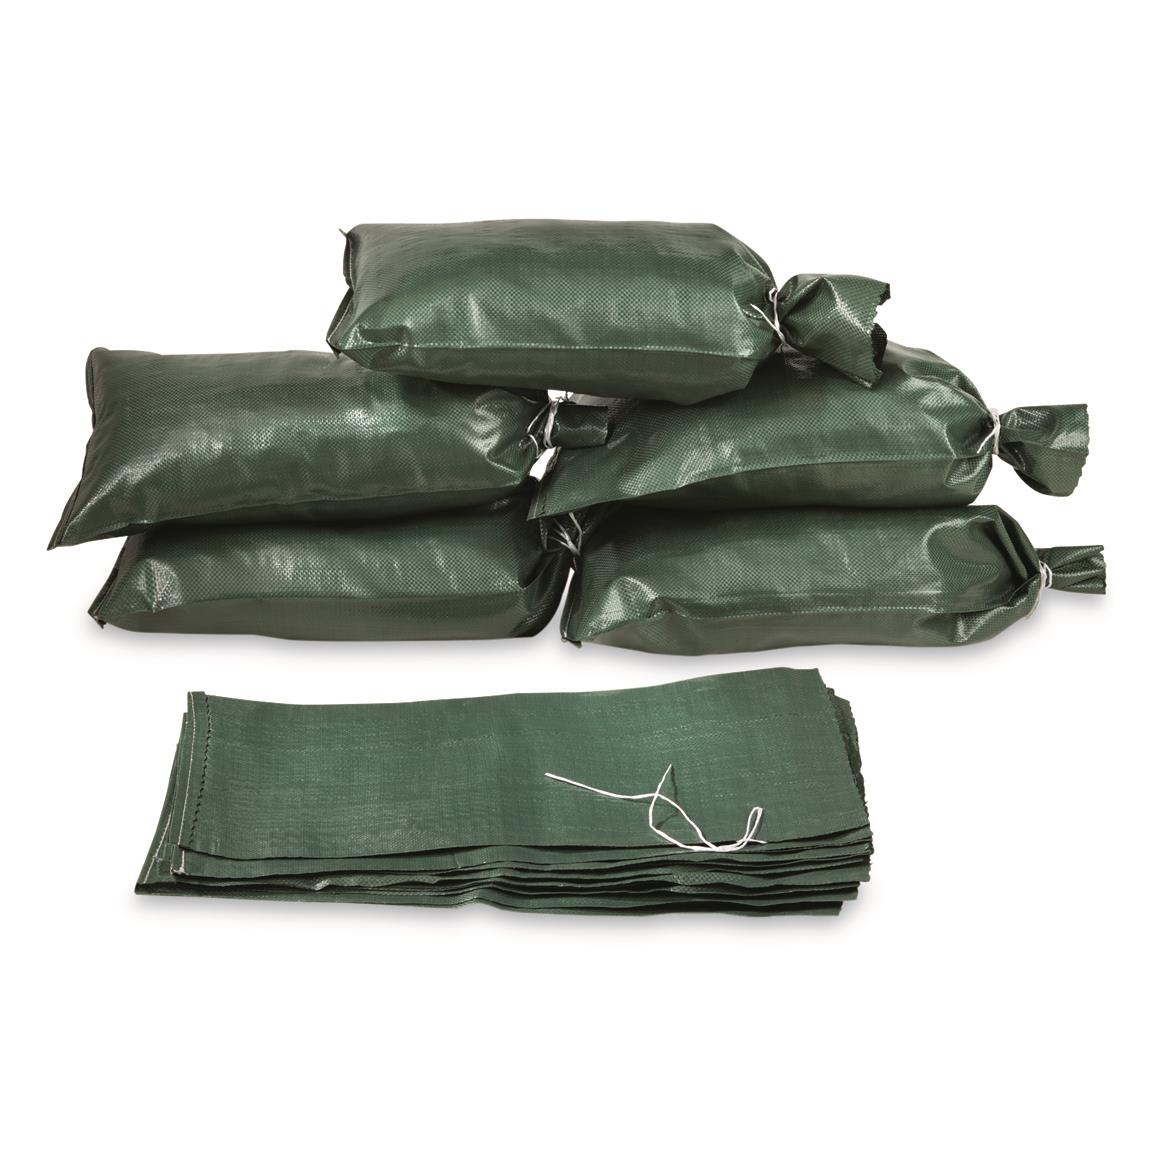 U.S. Military Surplus Sand Bags, 20 Pack, New, Olive Drab